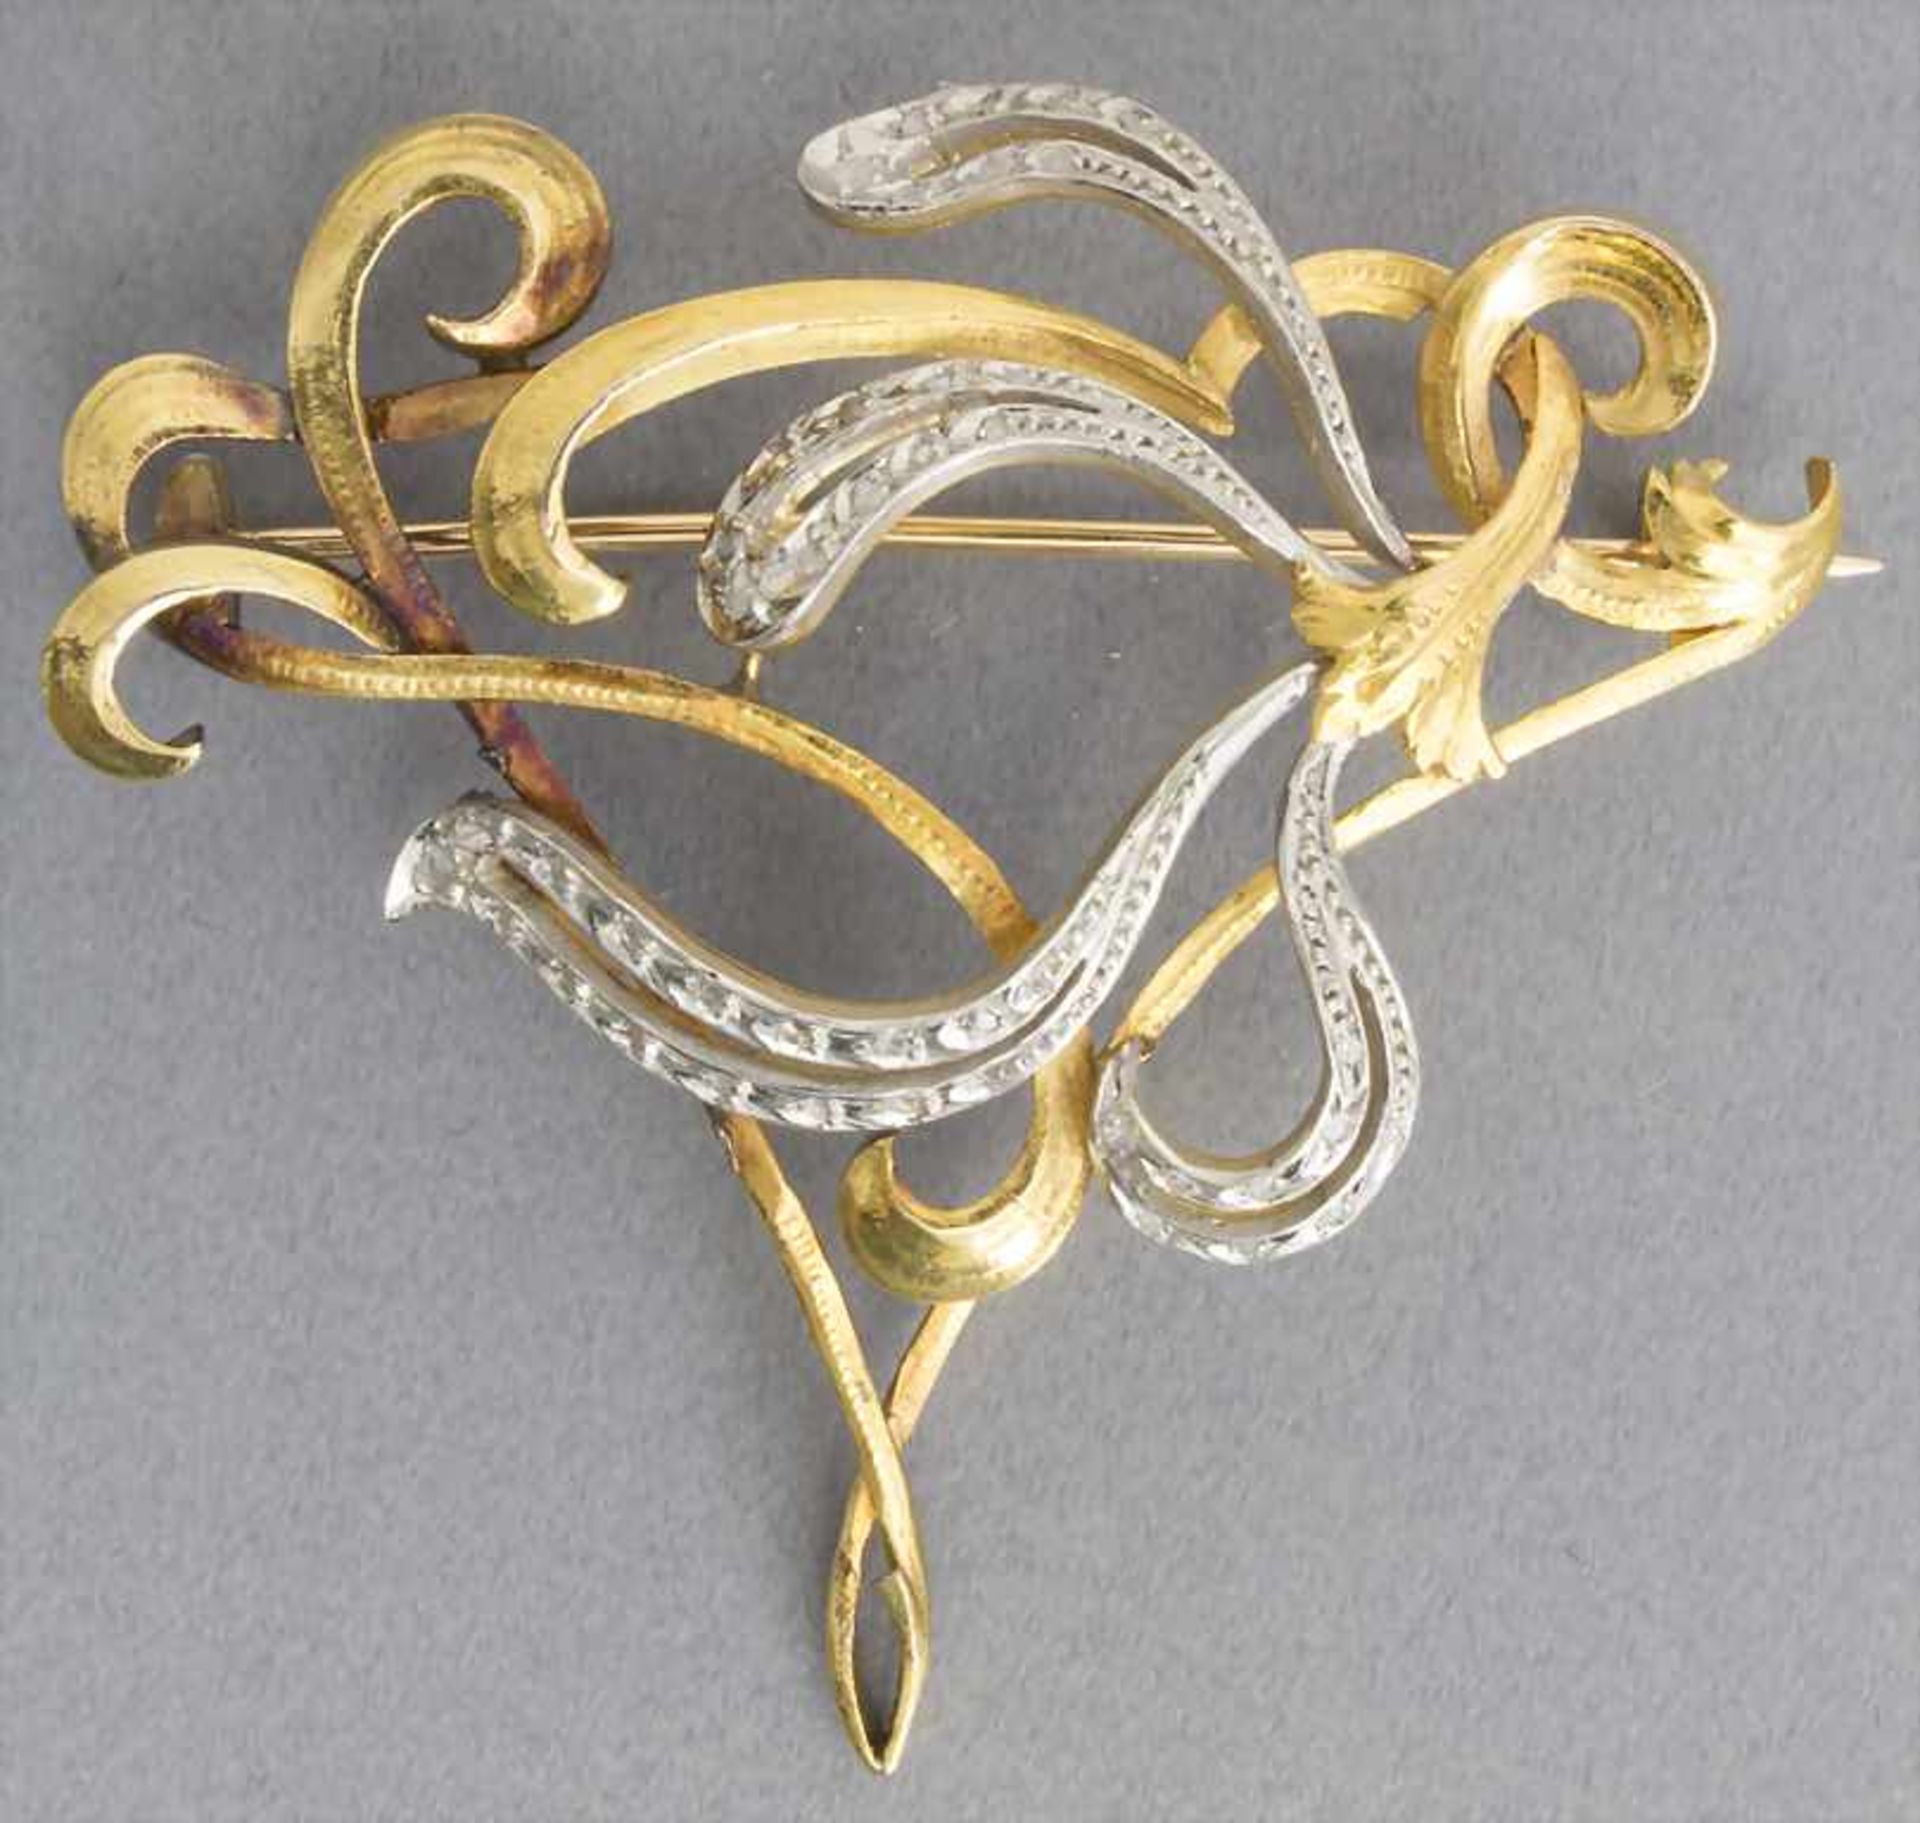 Jugendstil Brosche und Anhänger in Gold / An Art Nouveau brooch and pendantMaterial: GG/WG 750/000